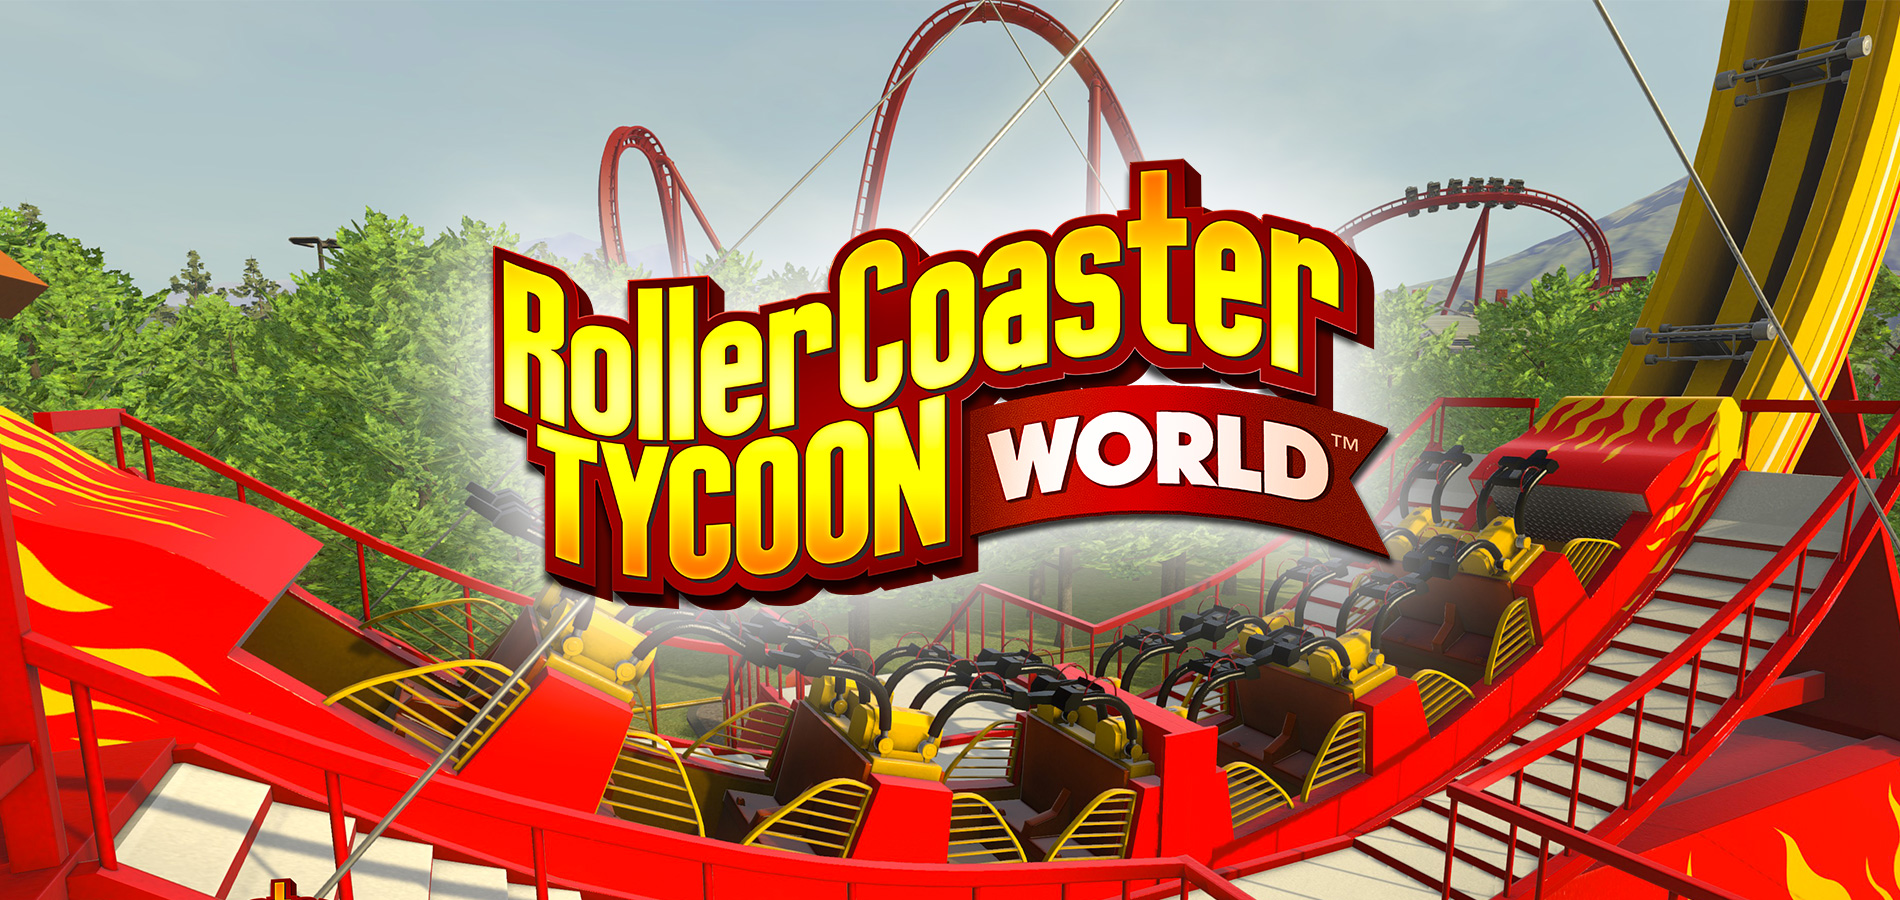 Roller Coaster Tycoon World CD Key + Crack PC Game Free